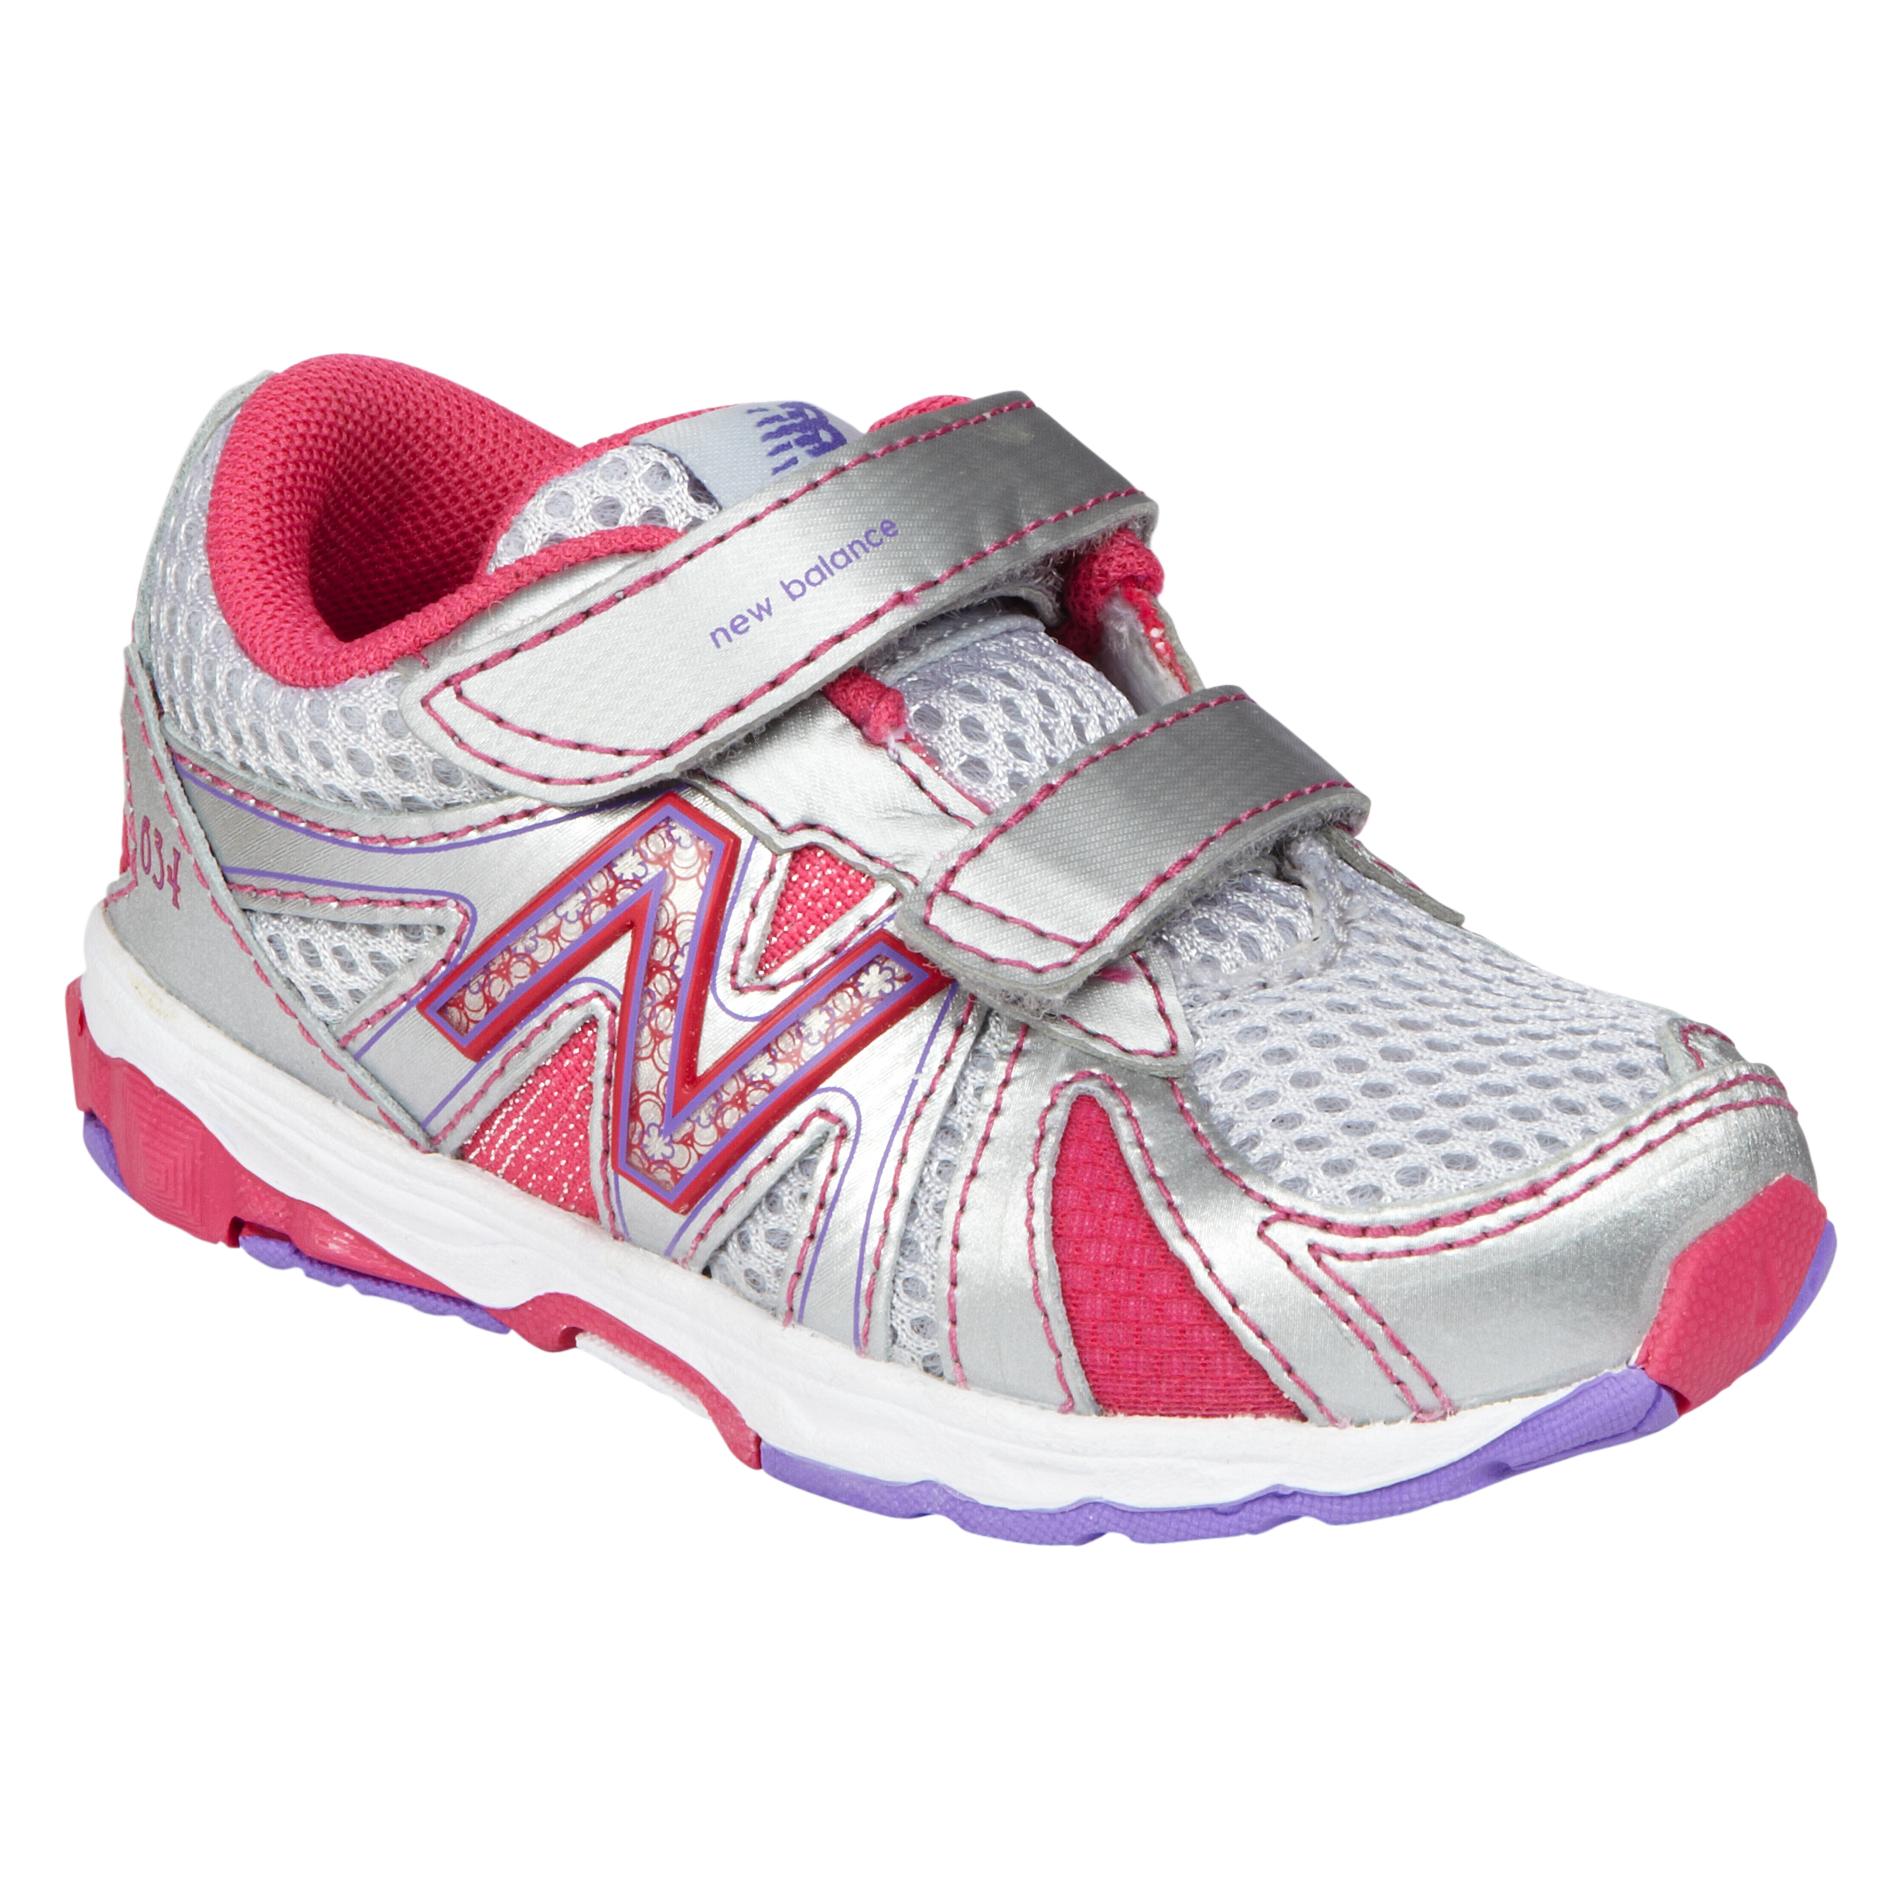 New Balance Toddler Girls Sneaker 634 Wide Width -  Pink